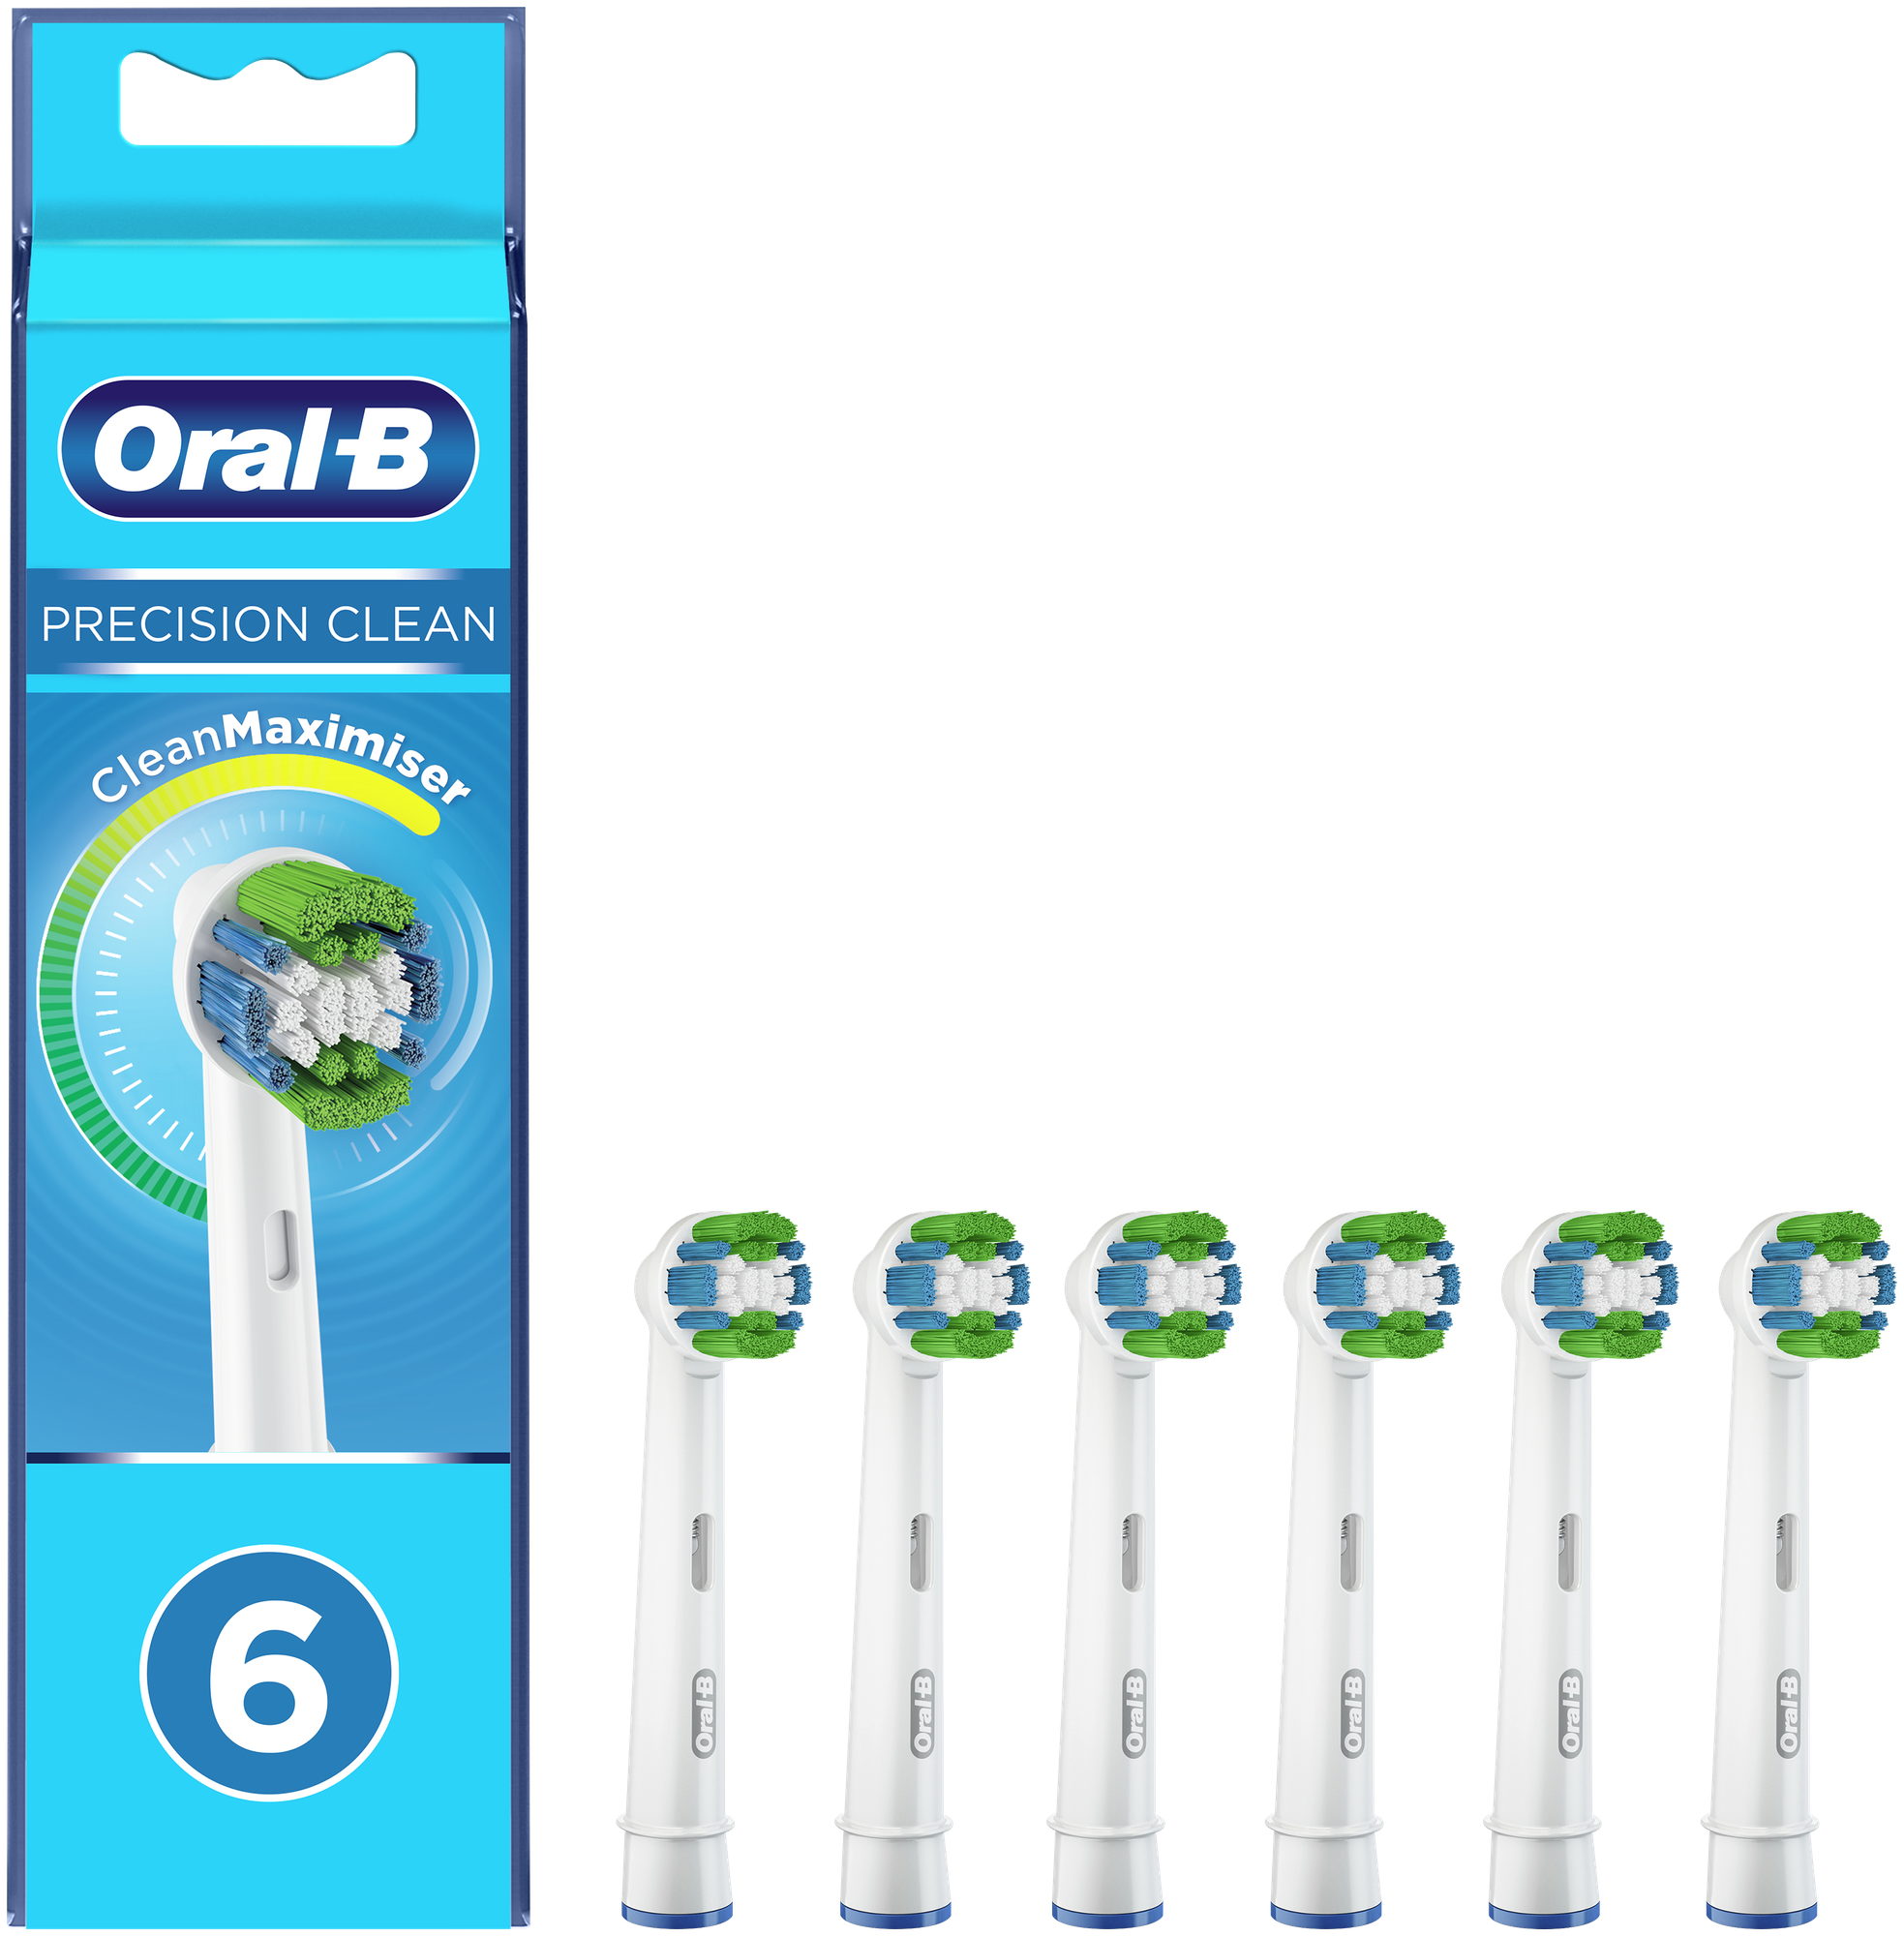     Oral-B Precision Clean 6 